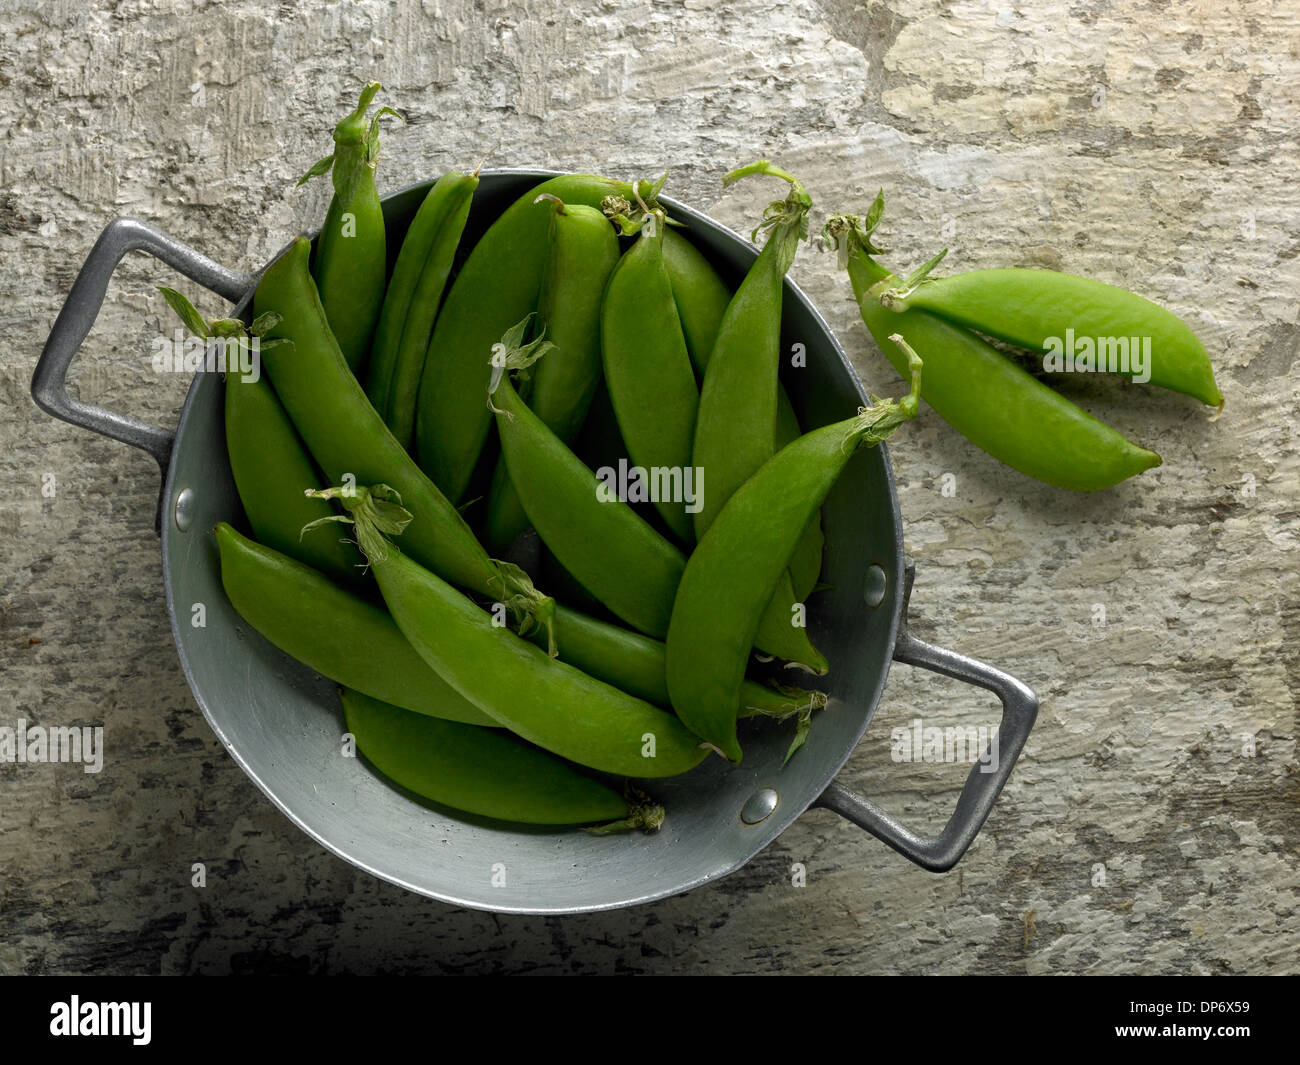 Mangetout peas Stock Photo